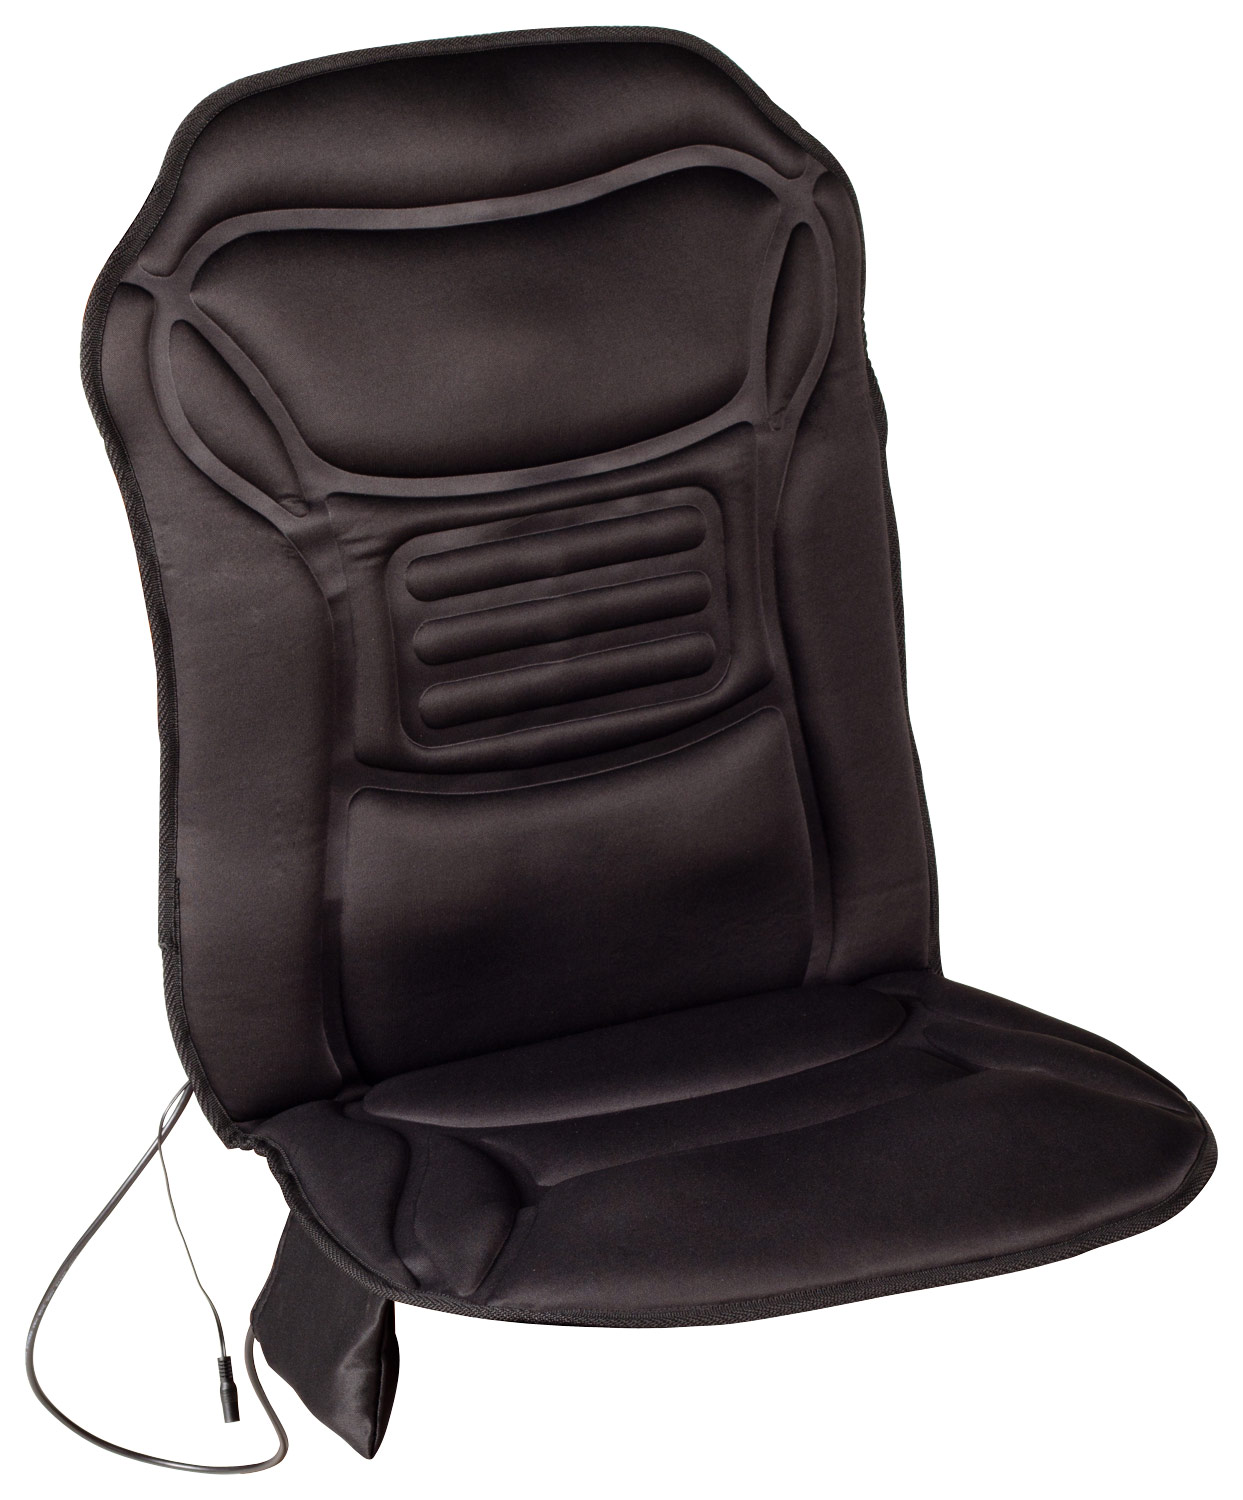 Comfort Products Inc. Heated Massage Seat Cushion Black 60-2926 - Best Buy